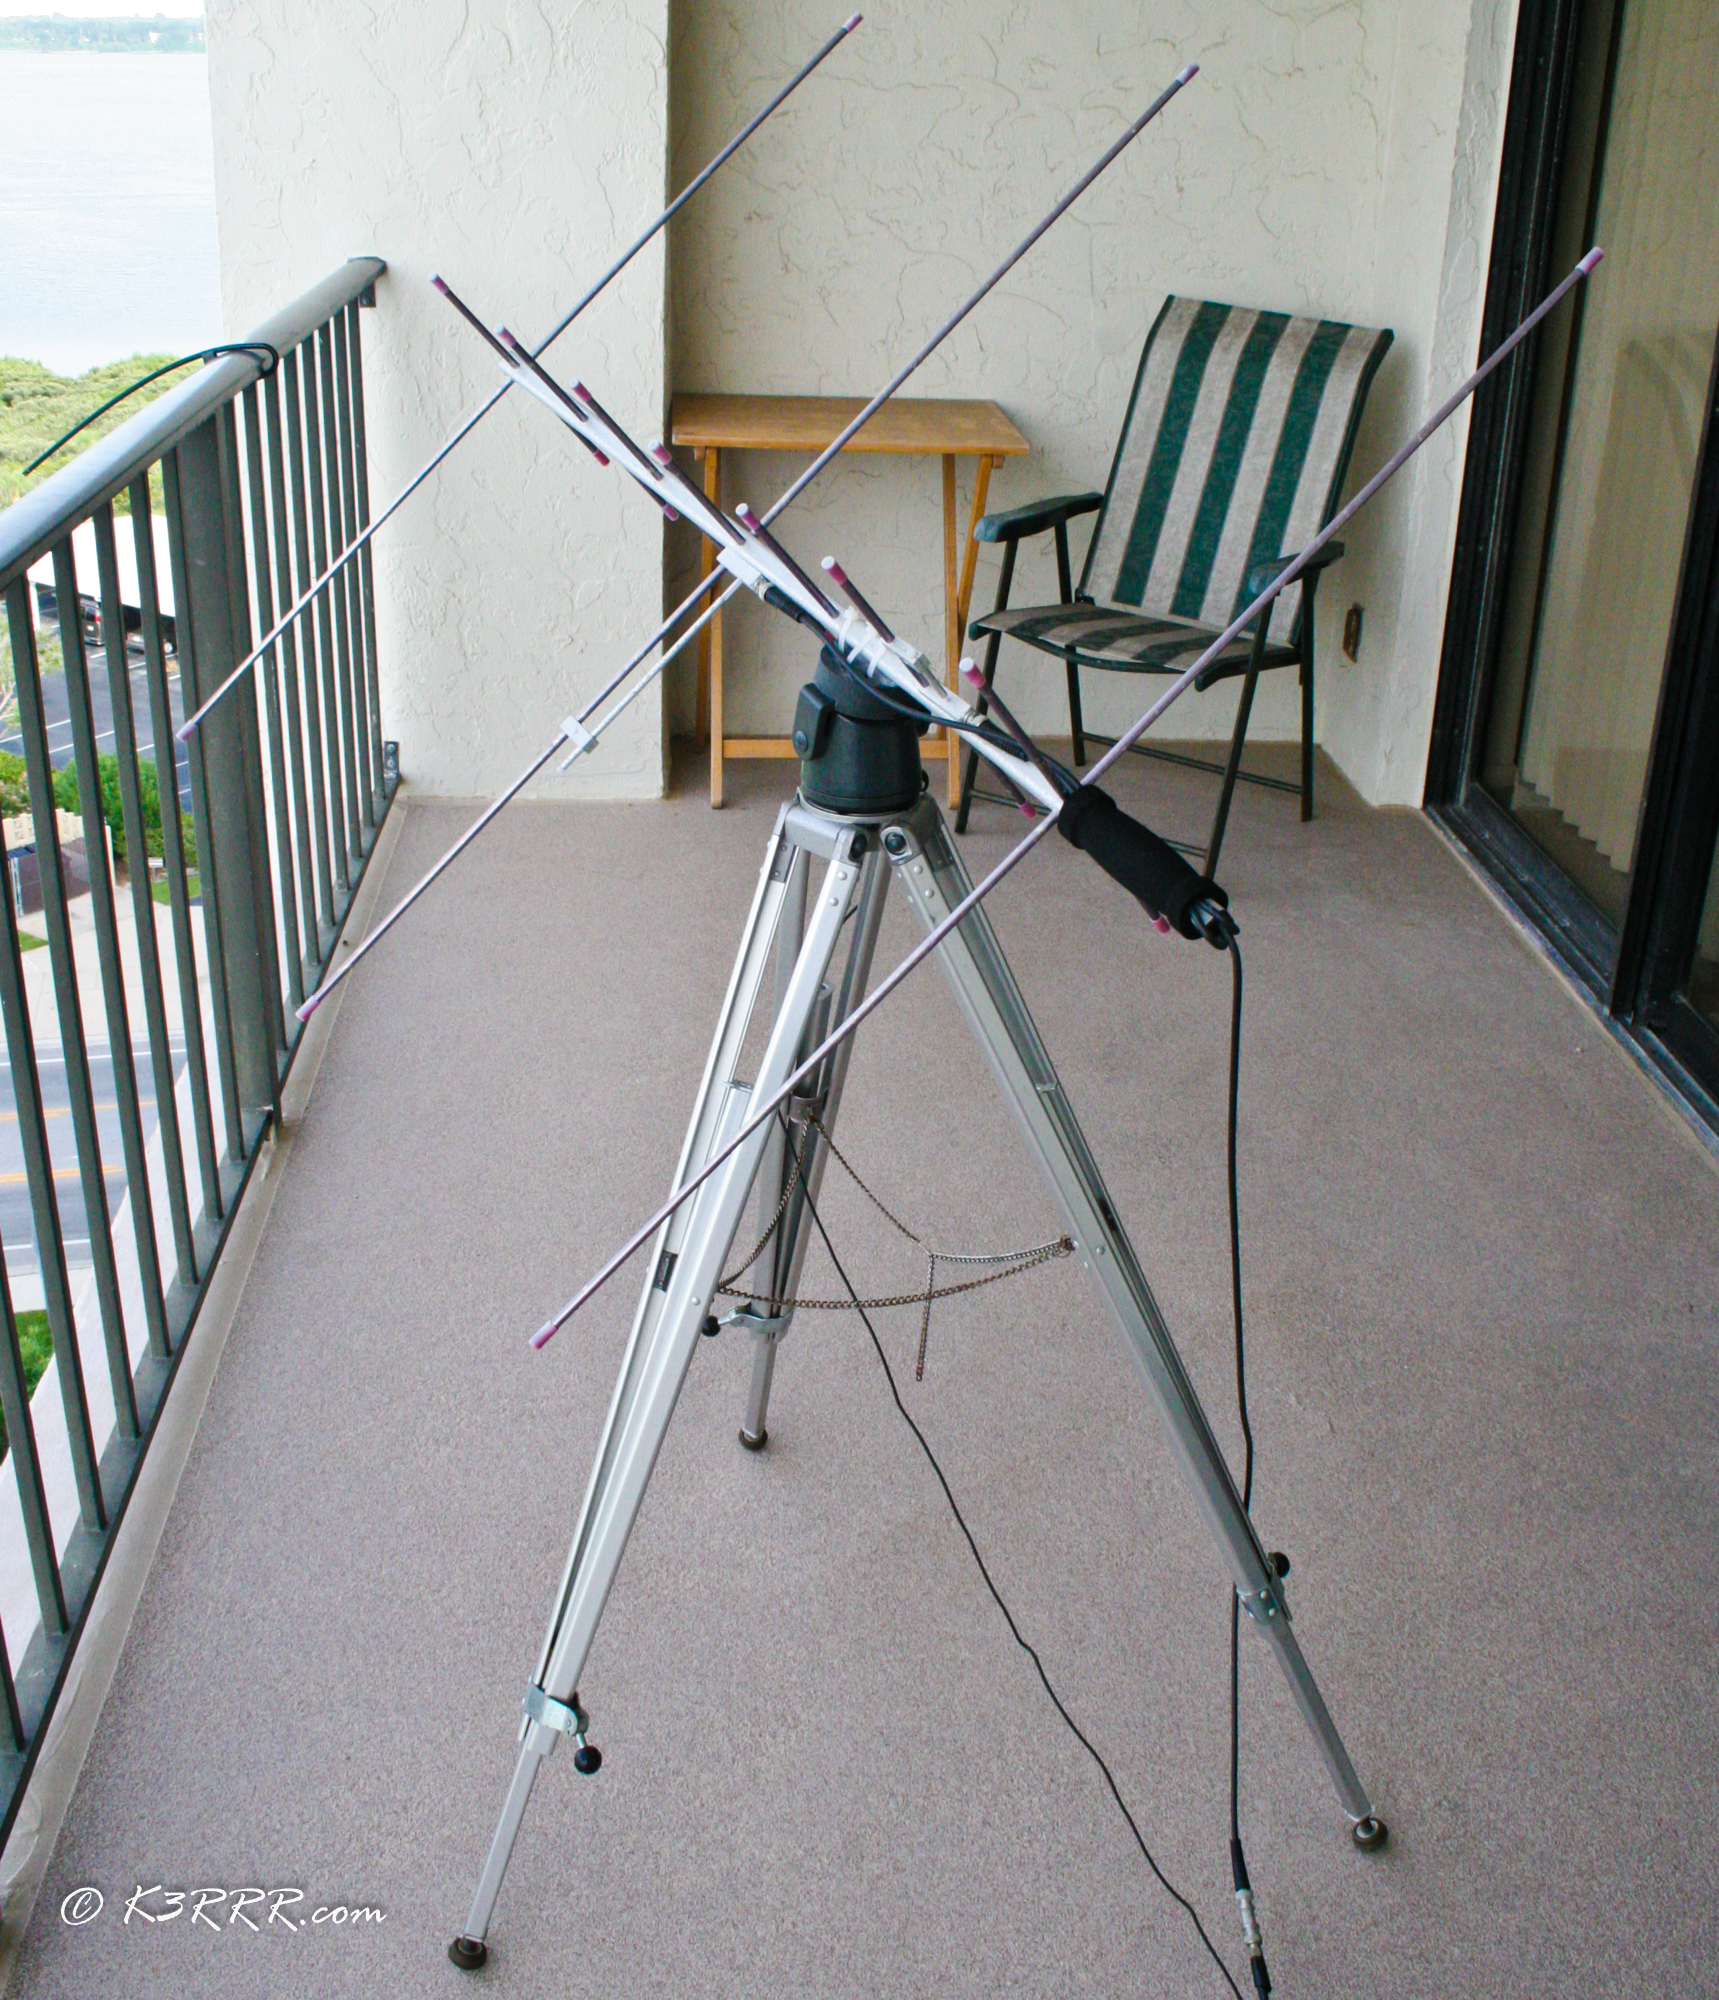 The K3RRR El Cheapo AZ-EL Rotor System for Ham Radio AMSAT Birds | K3RRR  Kilo Three Triple R Amateur Radio Station